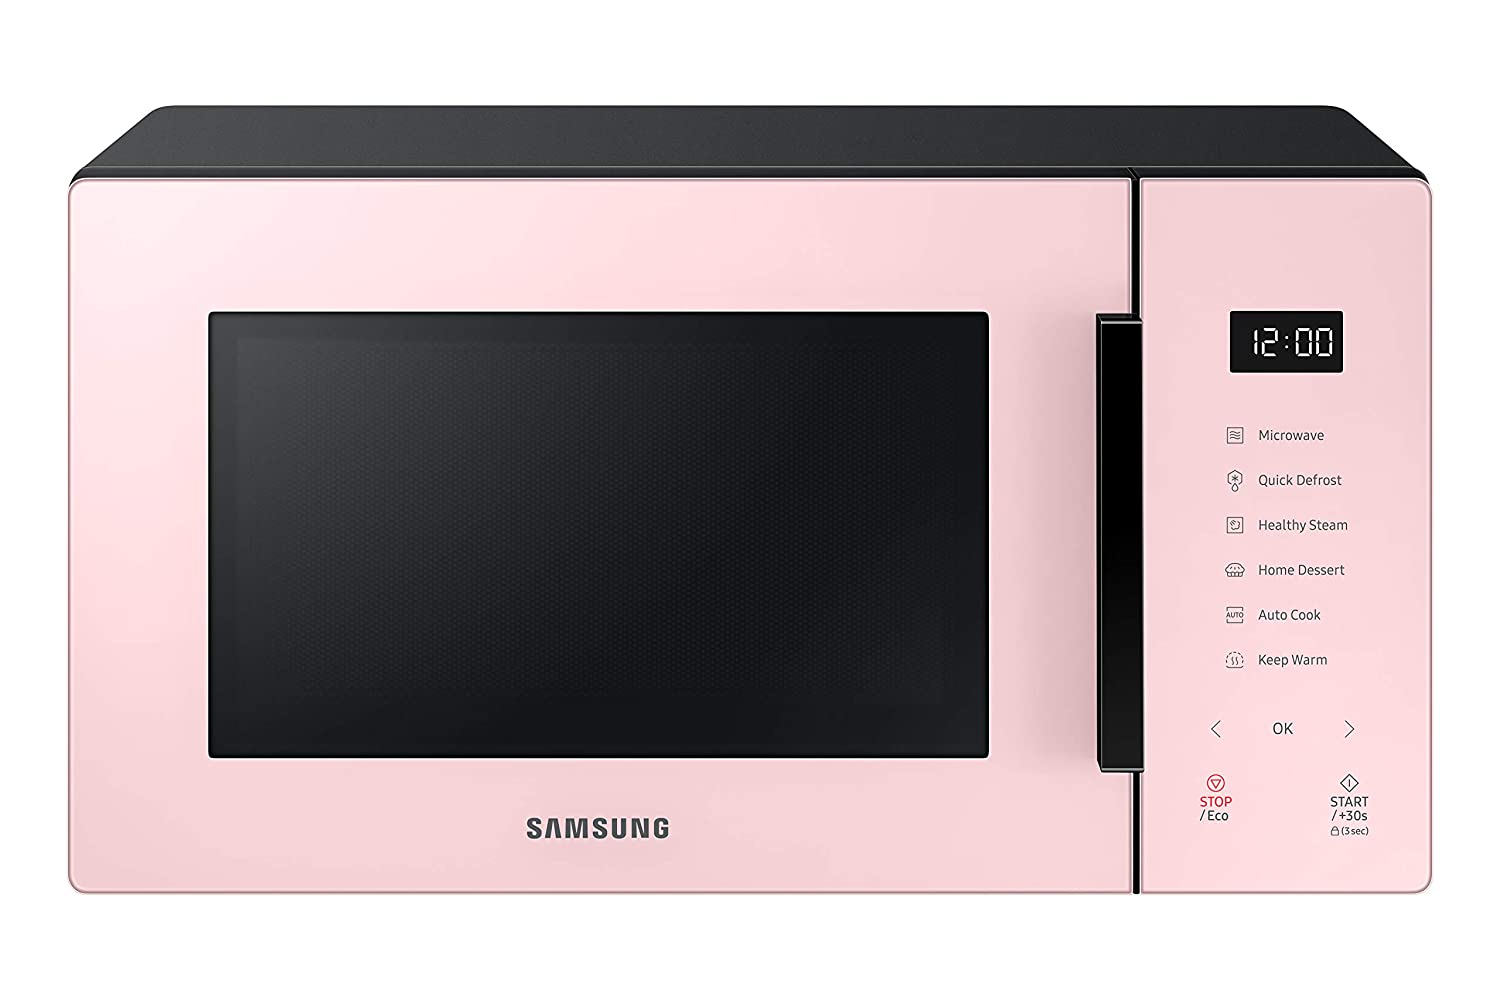 SAMSUNG 23 L Baker Series Microwave Oven